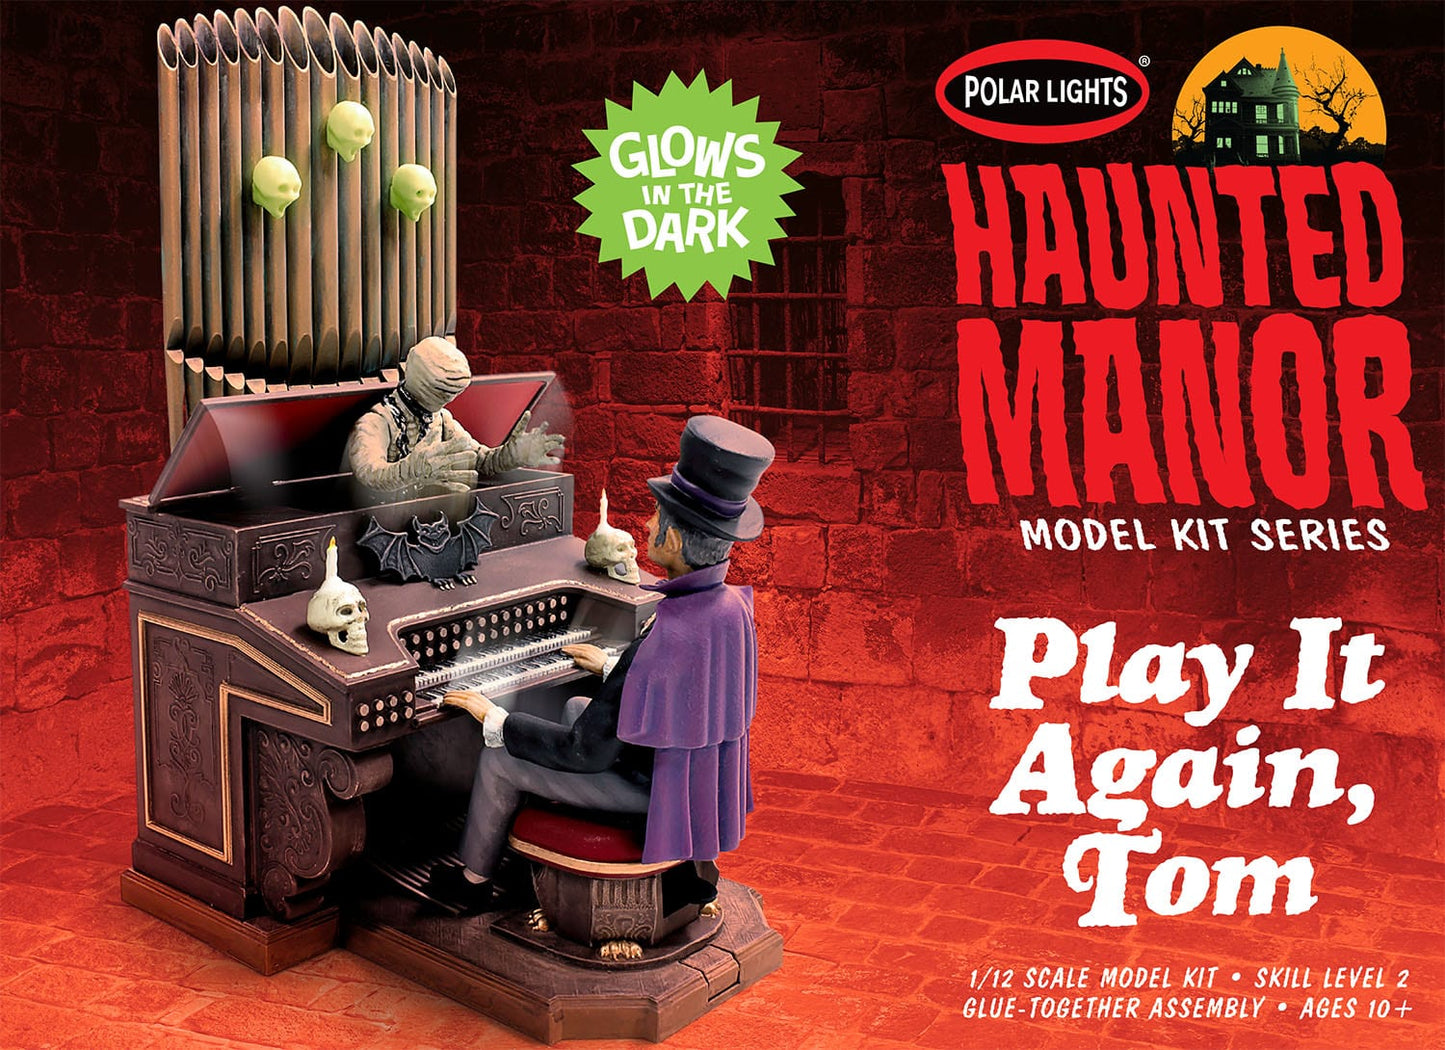 Polar Lights 984 1:12 Haunted Manor Play It Again Tom Playing Organ Diorama Set